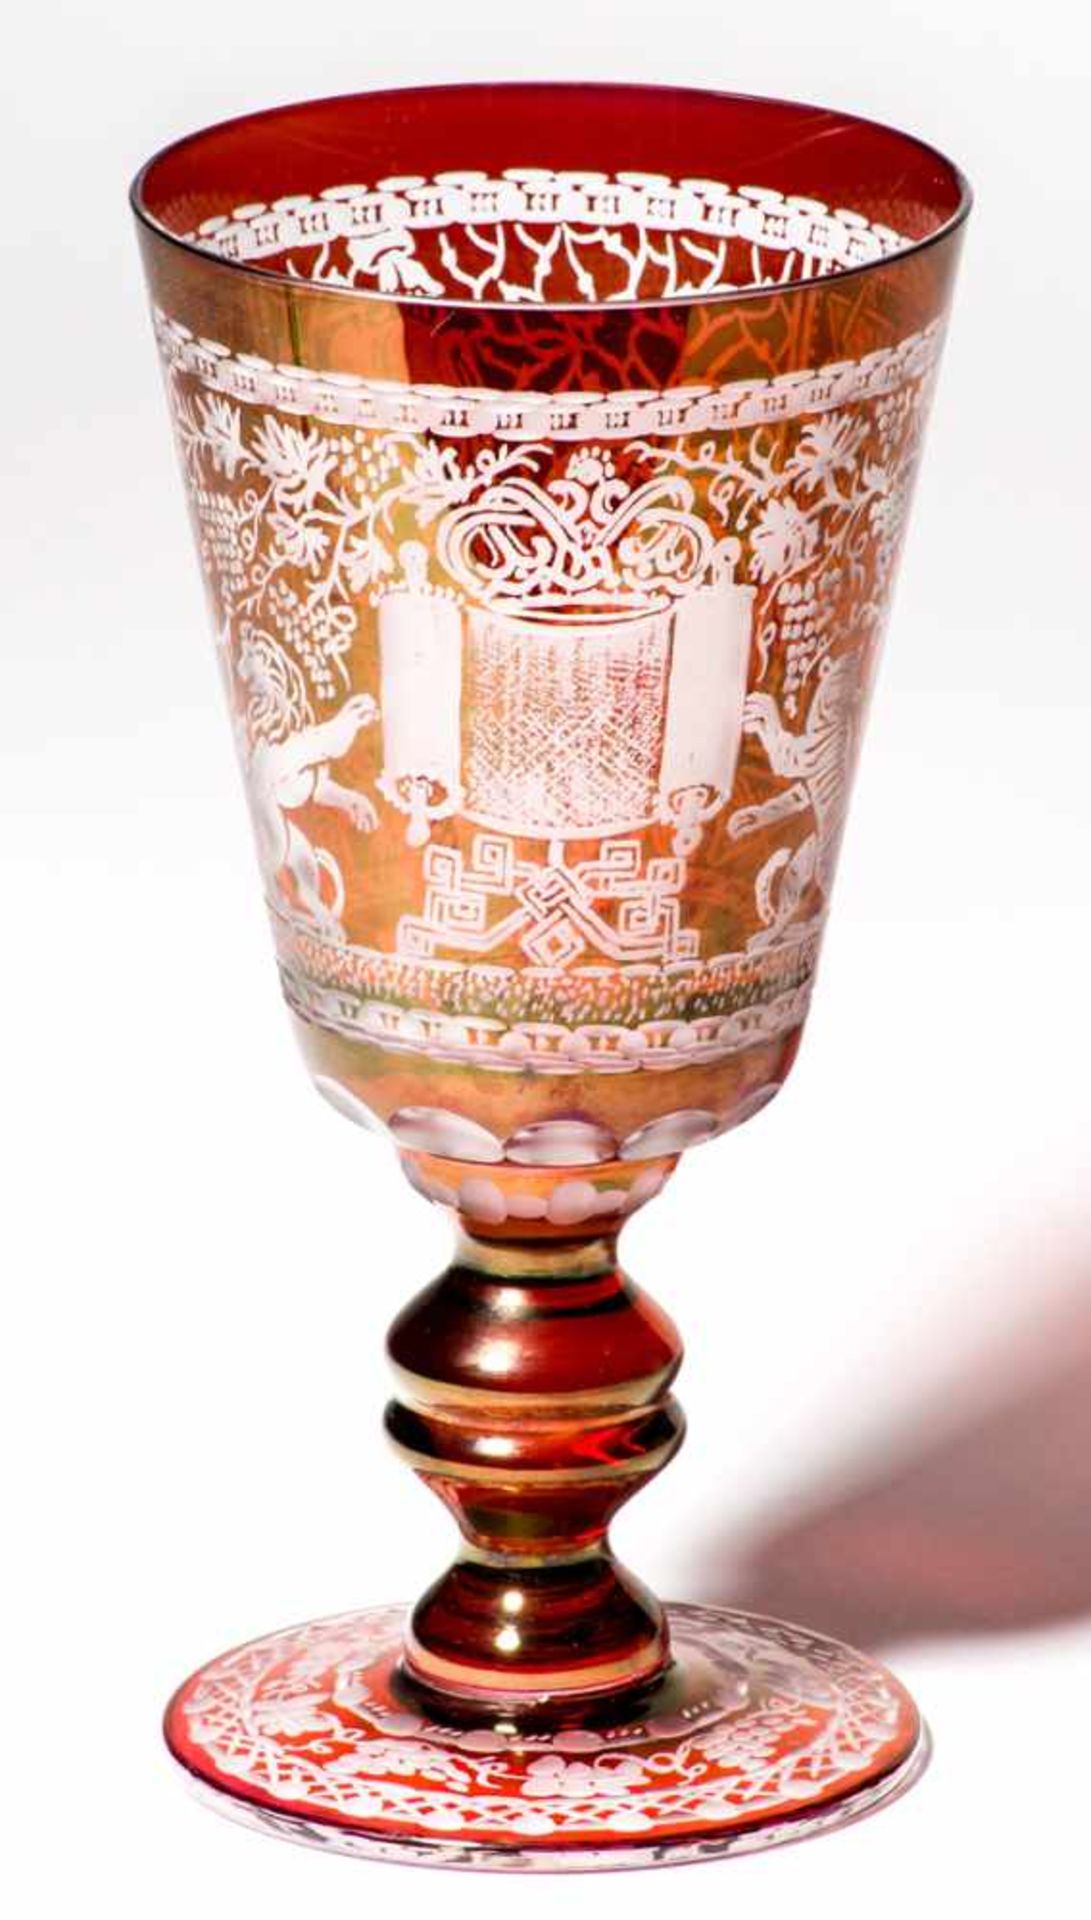 Freimaurer-Pokal wohl Böhmen, 19. Jh. d: 10,5 cm, h: 20,5 cmProvenienz: Sammlung Dr. Dorothea